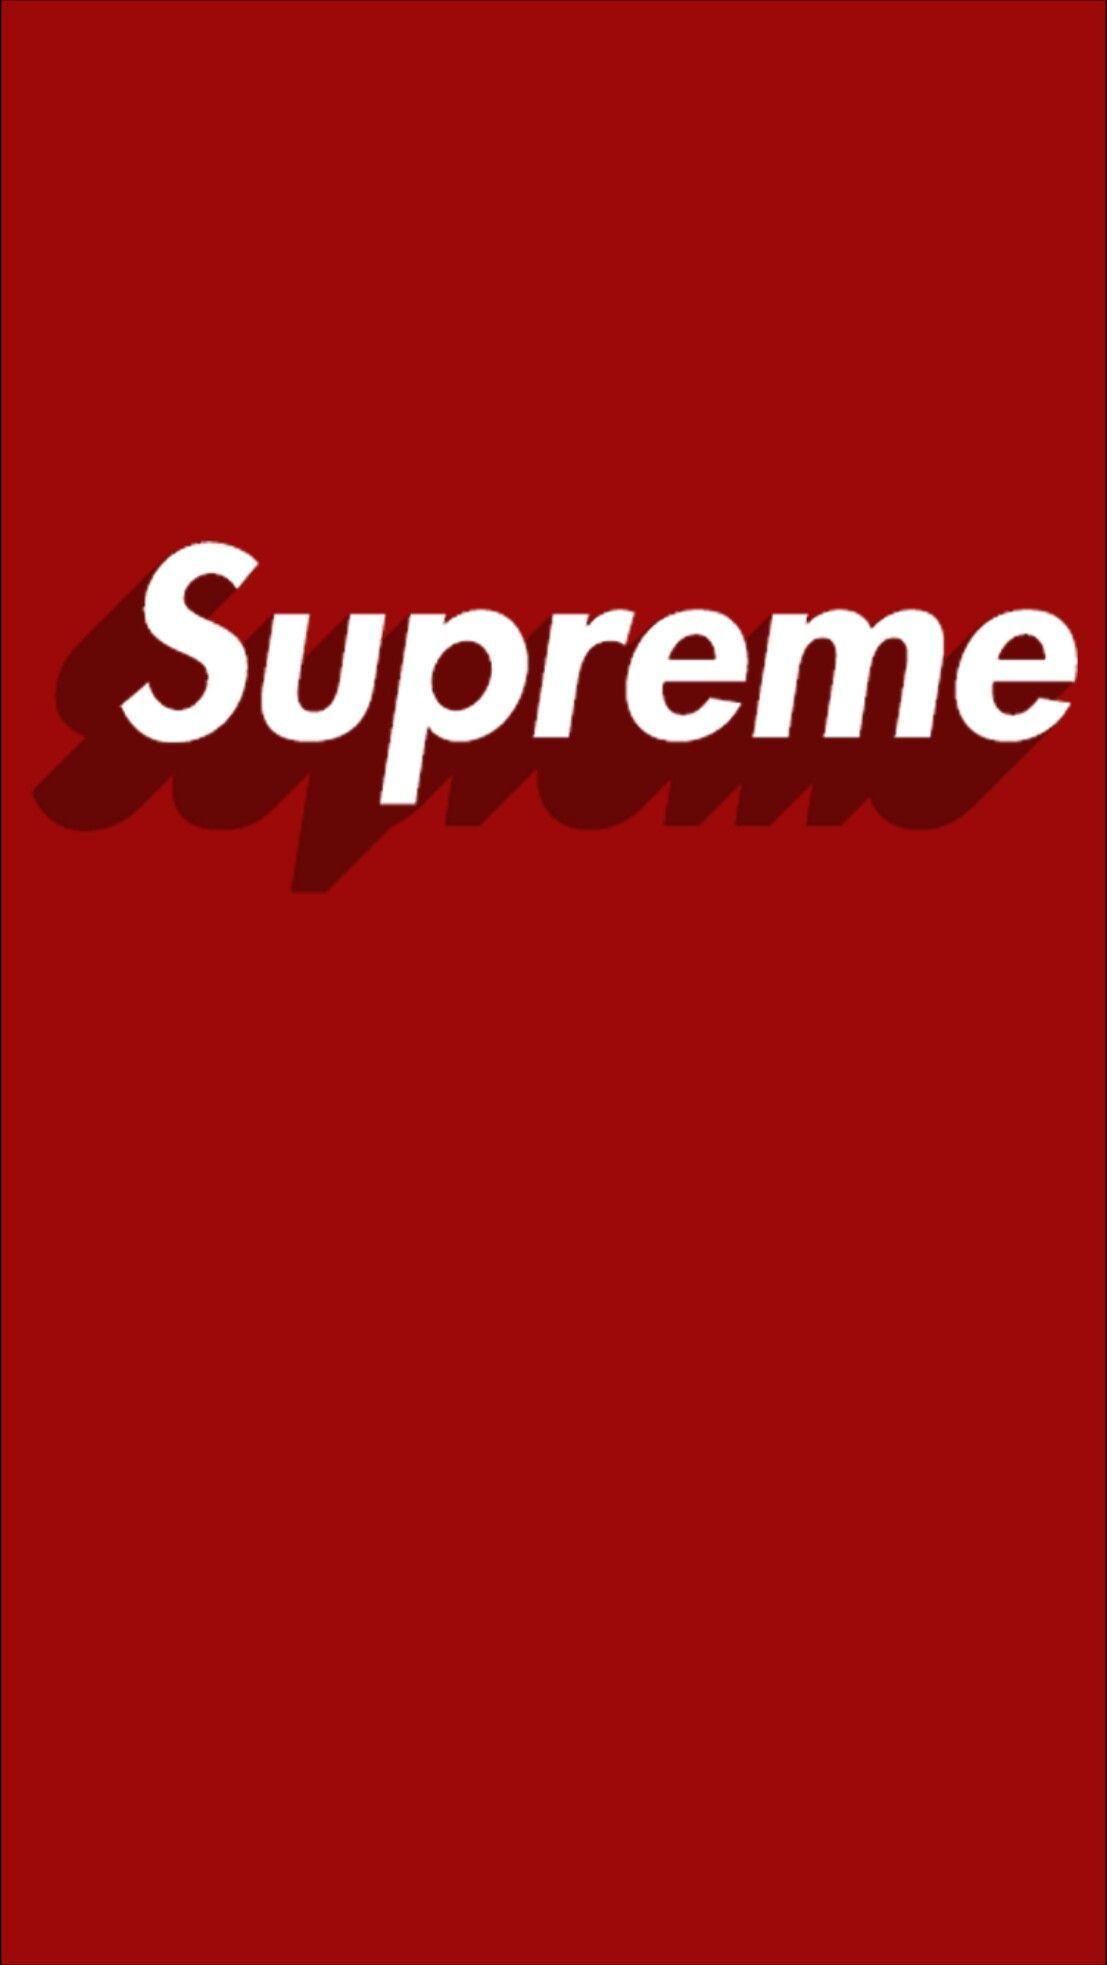 Nike Supreme iPhone Wallpapers - Top